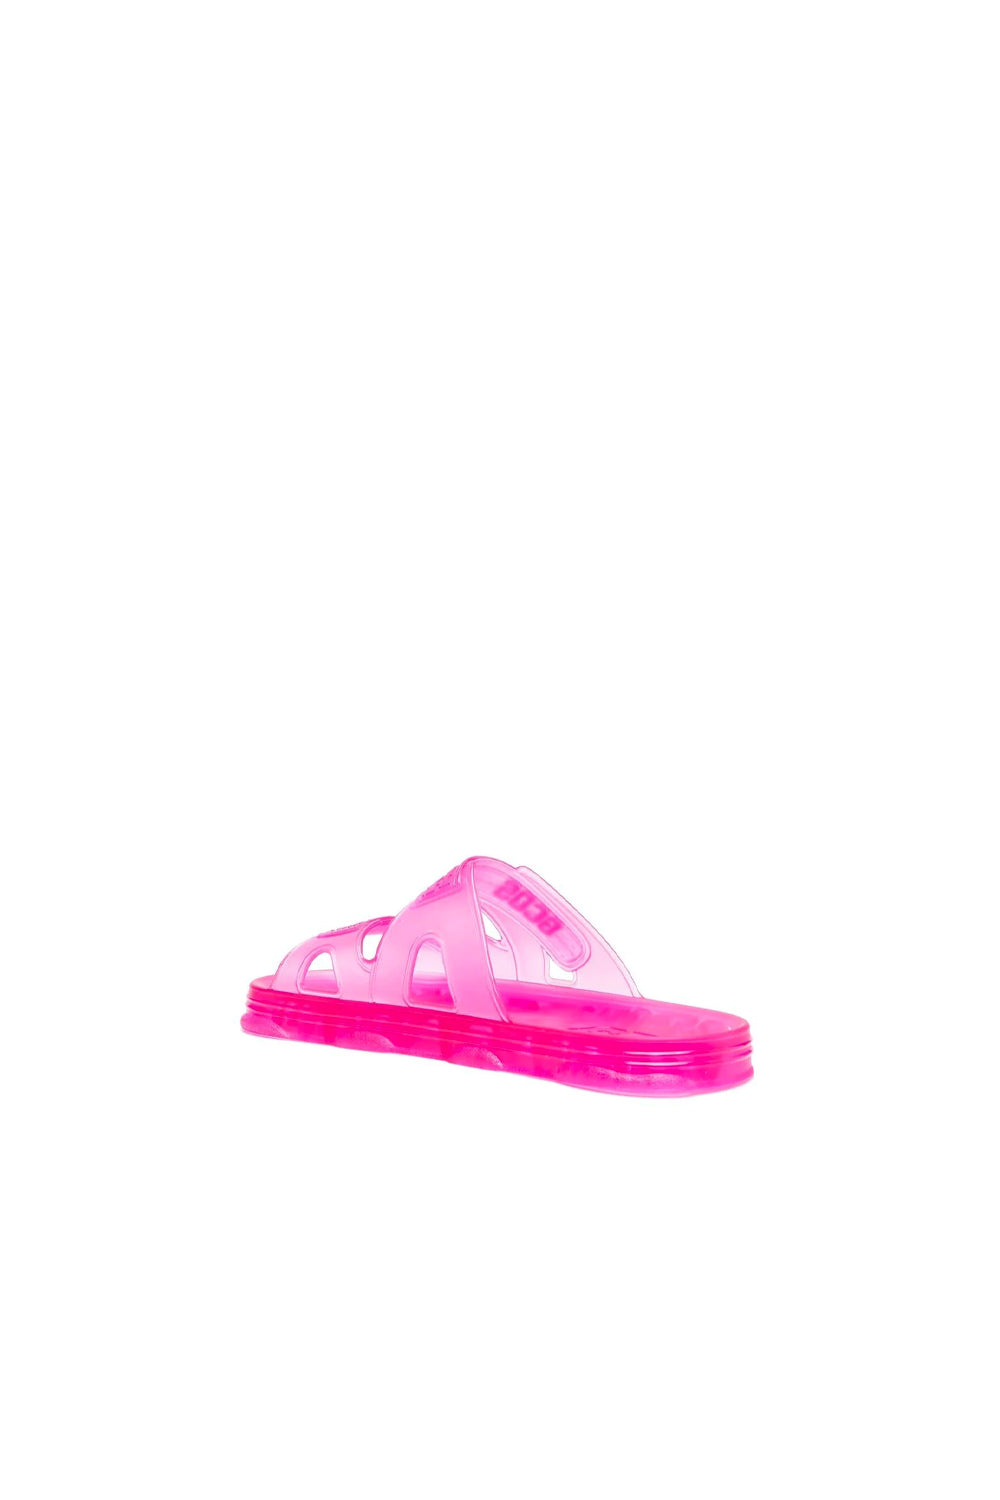 Gcds logo-strap fuchsia pink sandals